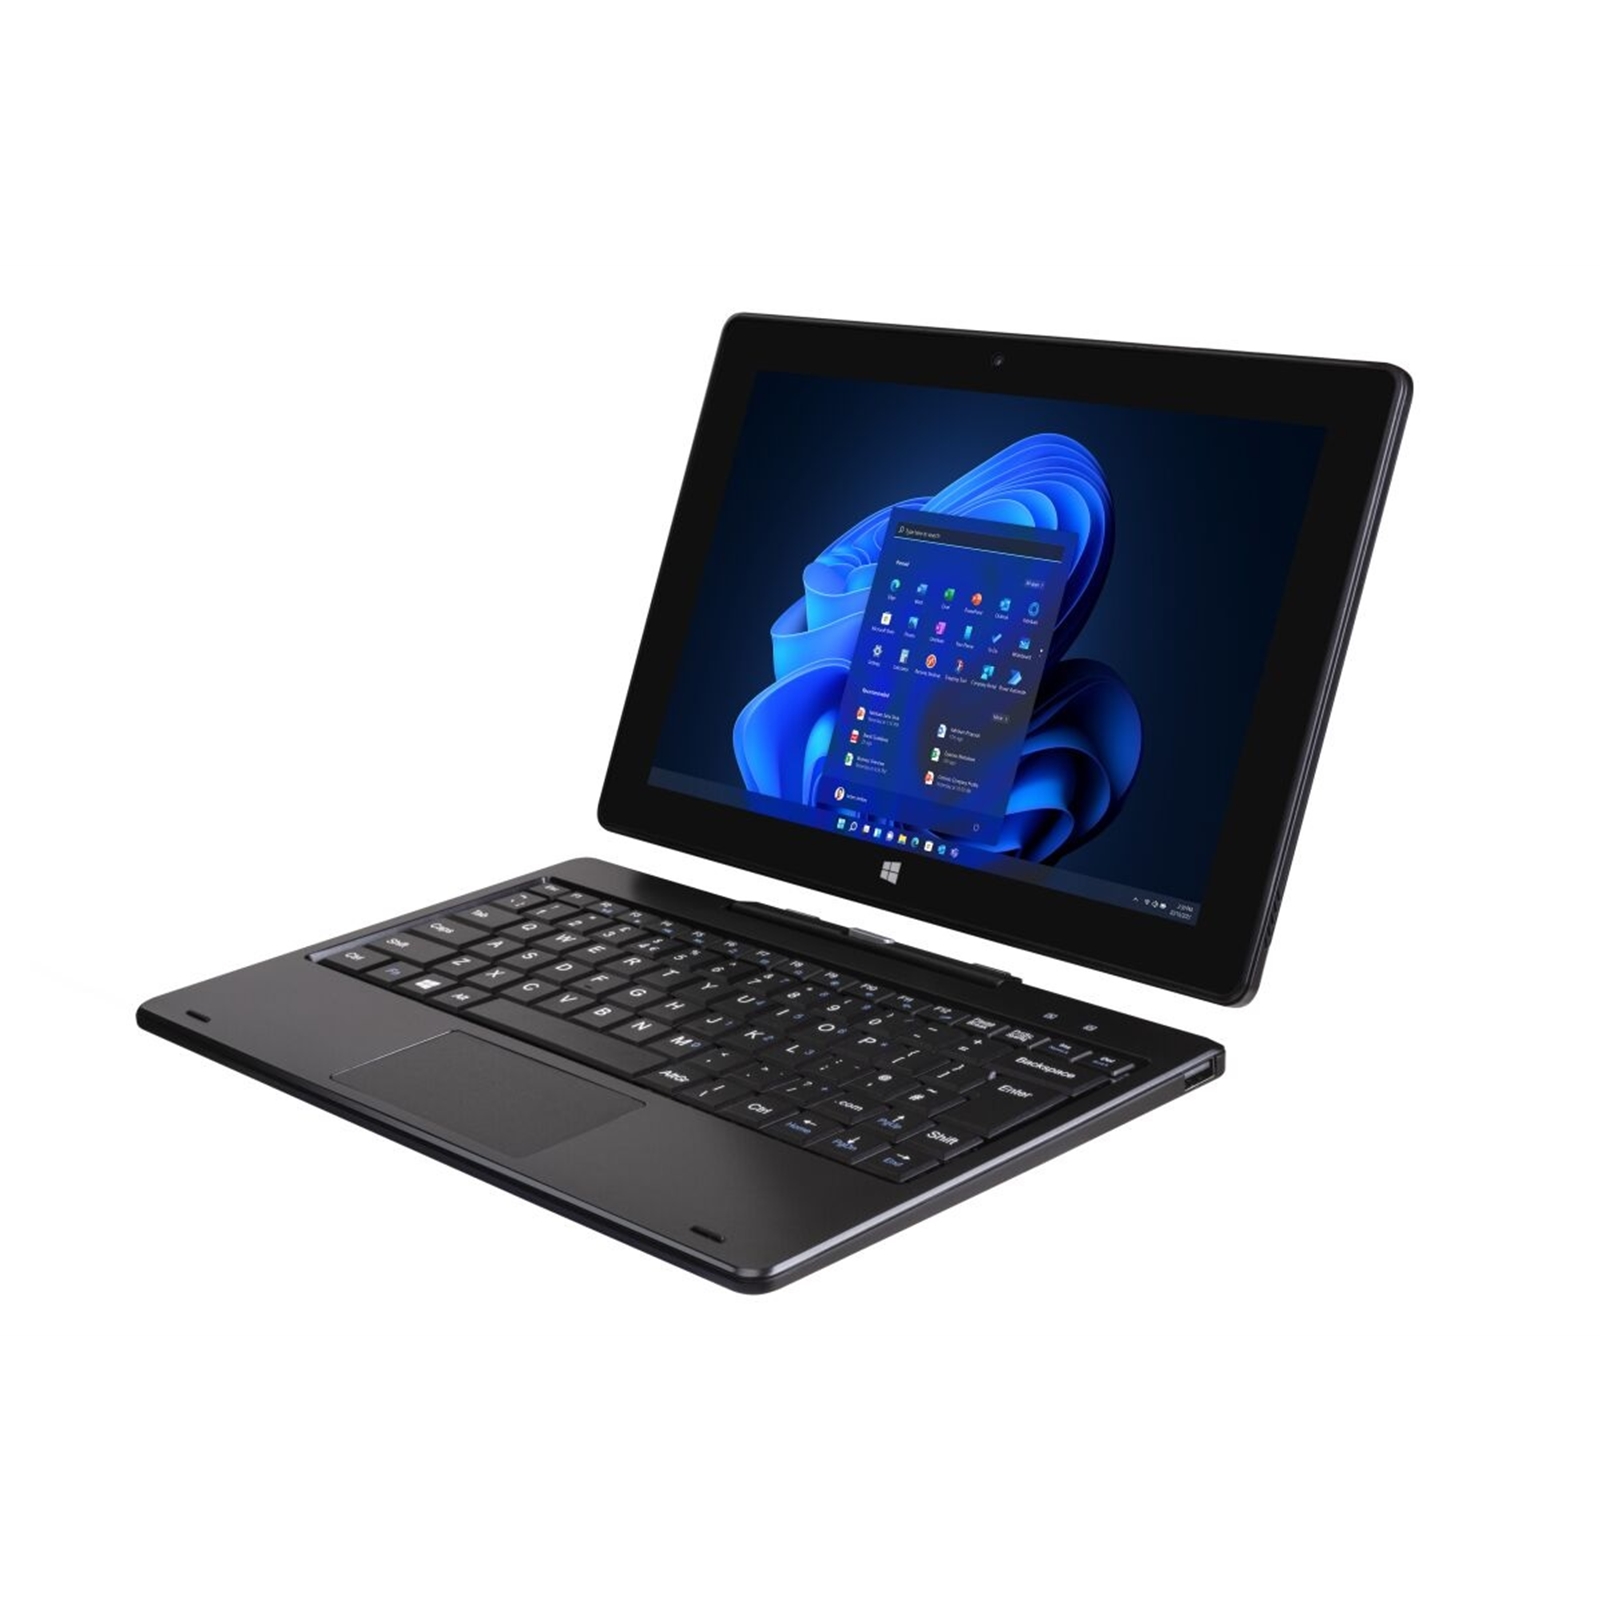 Dynabook Toshiba Satellite Pro ET10-G-106 2 in 1 Touchscreen Laptop with Detachable Keyboard, 10.1 Inch Screen, Intel Celeron N3350, 4GB RAM, 128GB SSD, Windows 10 Pro Education